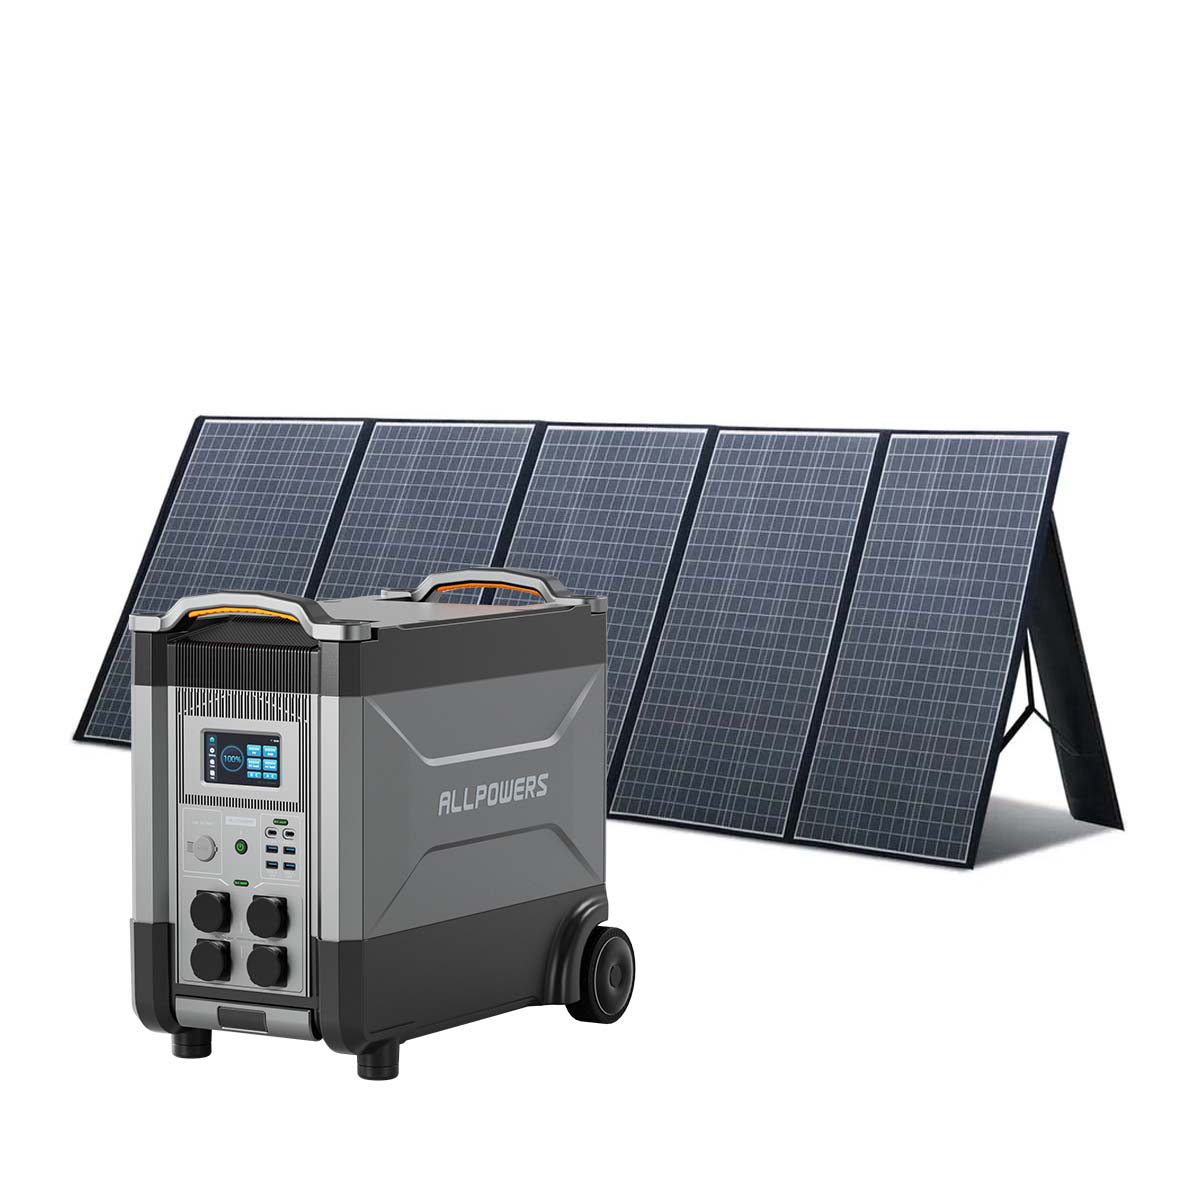 ALLPOWERS Solar Generator Kit 4000W (R4000 + SP037 400W Solar Panel) 